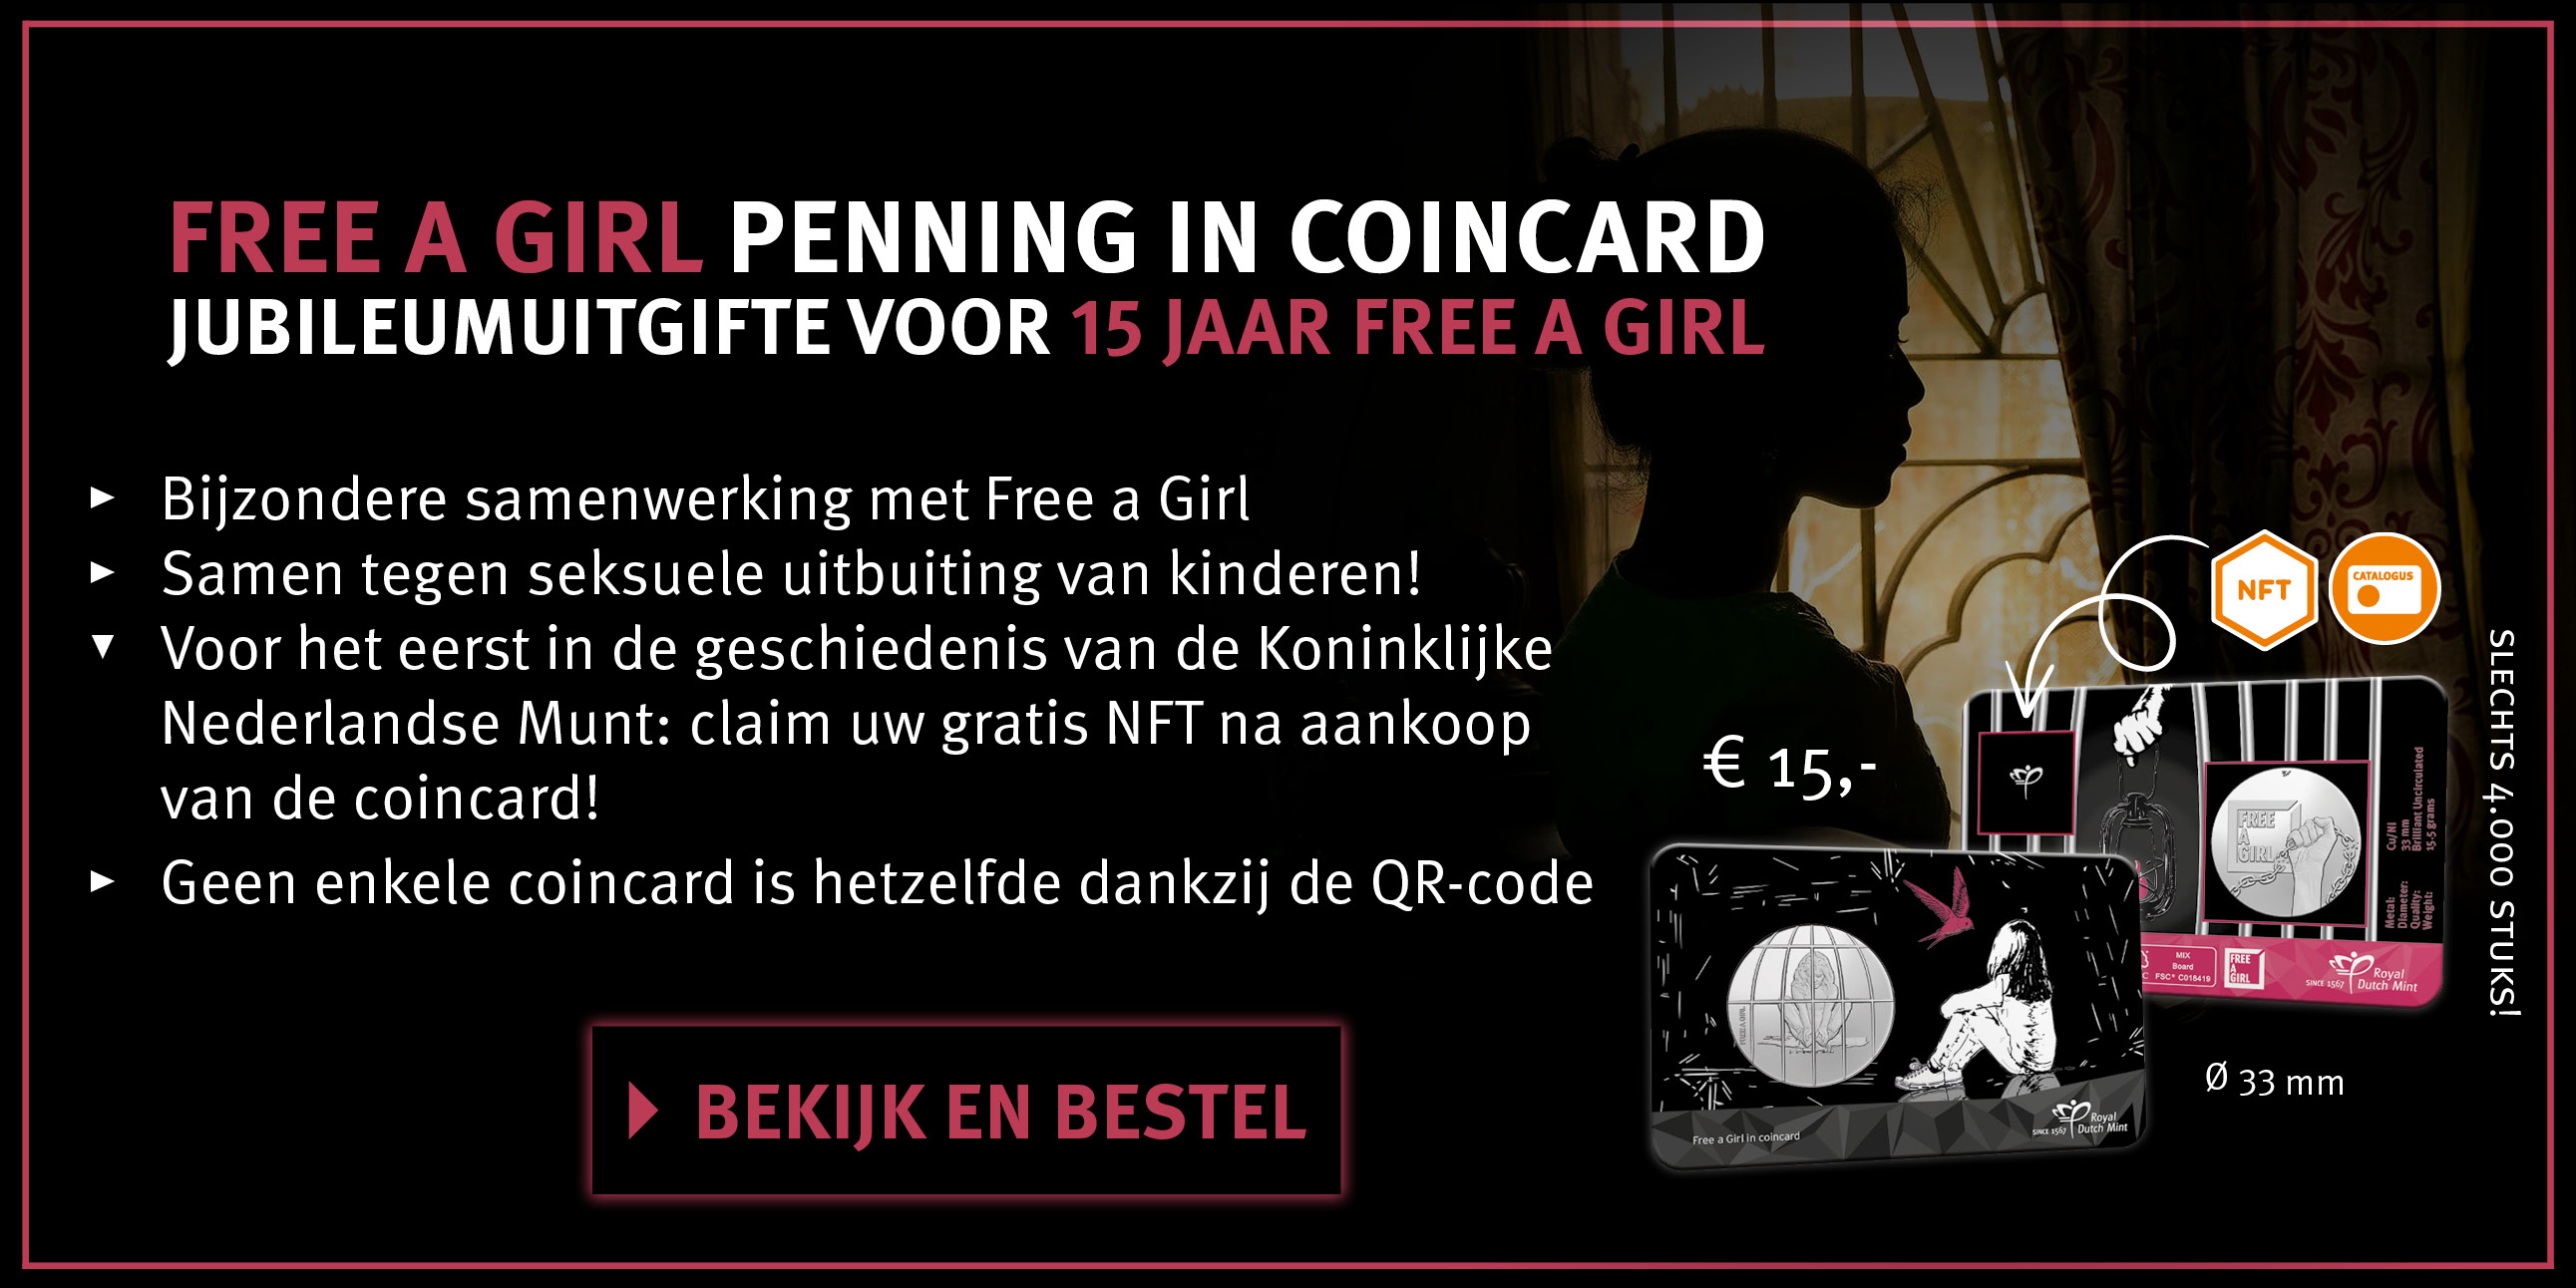 Bekijk en bestel: Free a girl penning in coincard